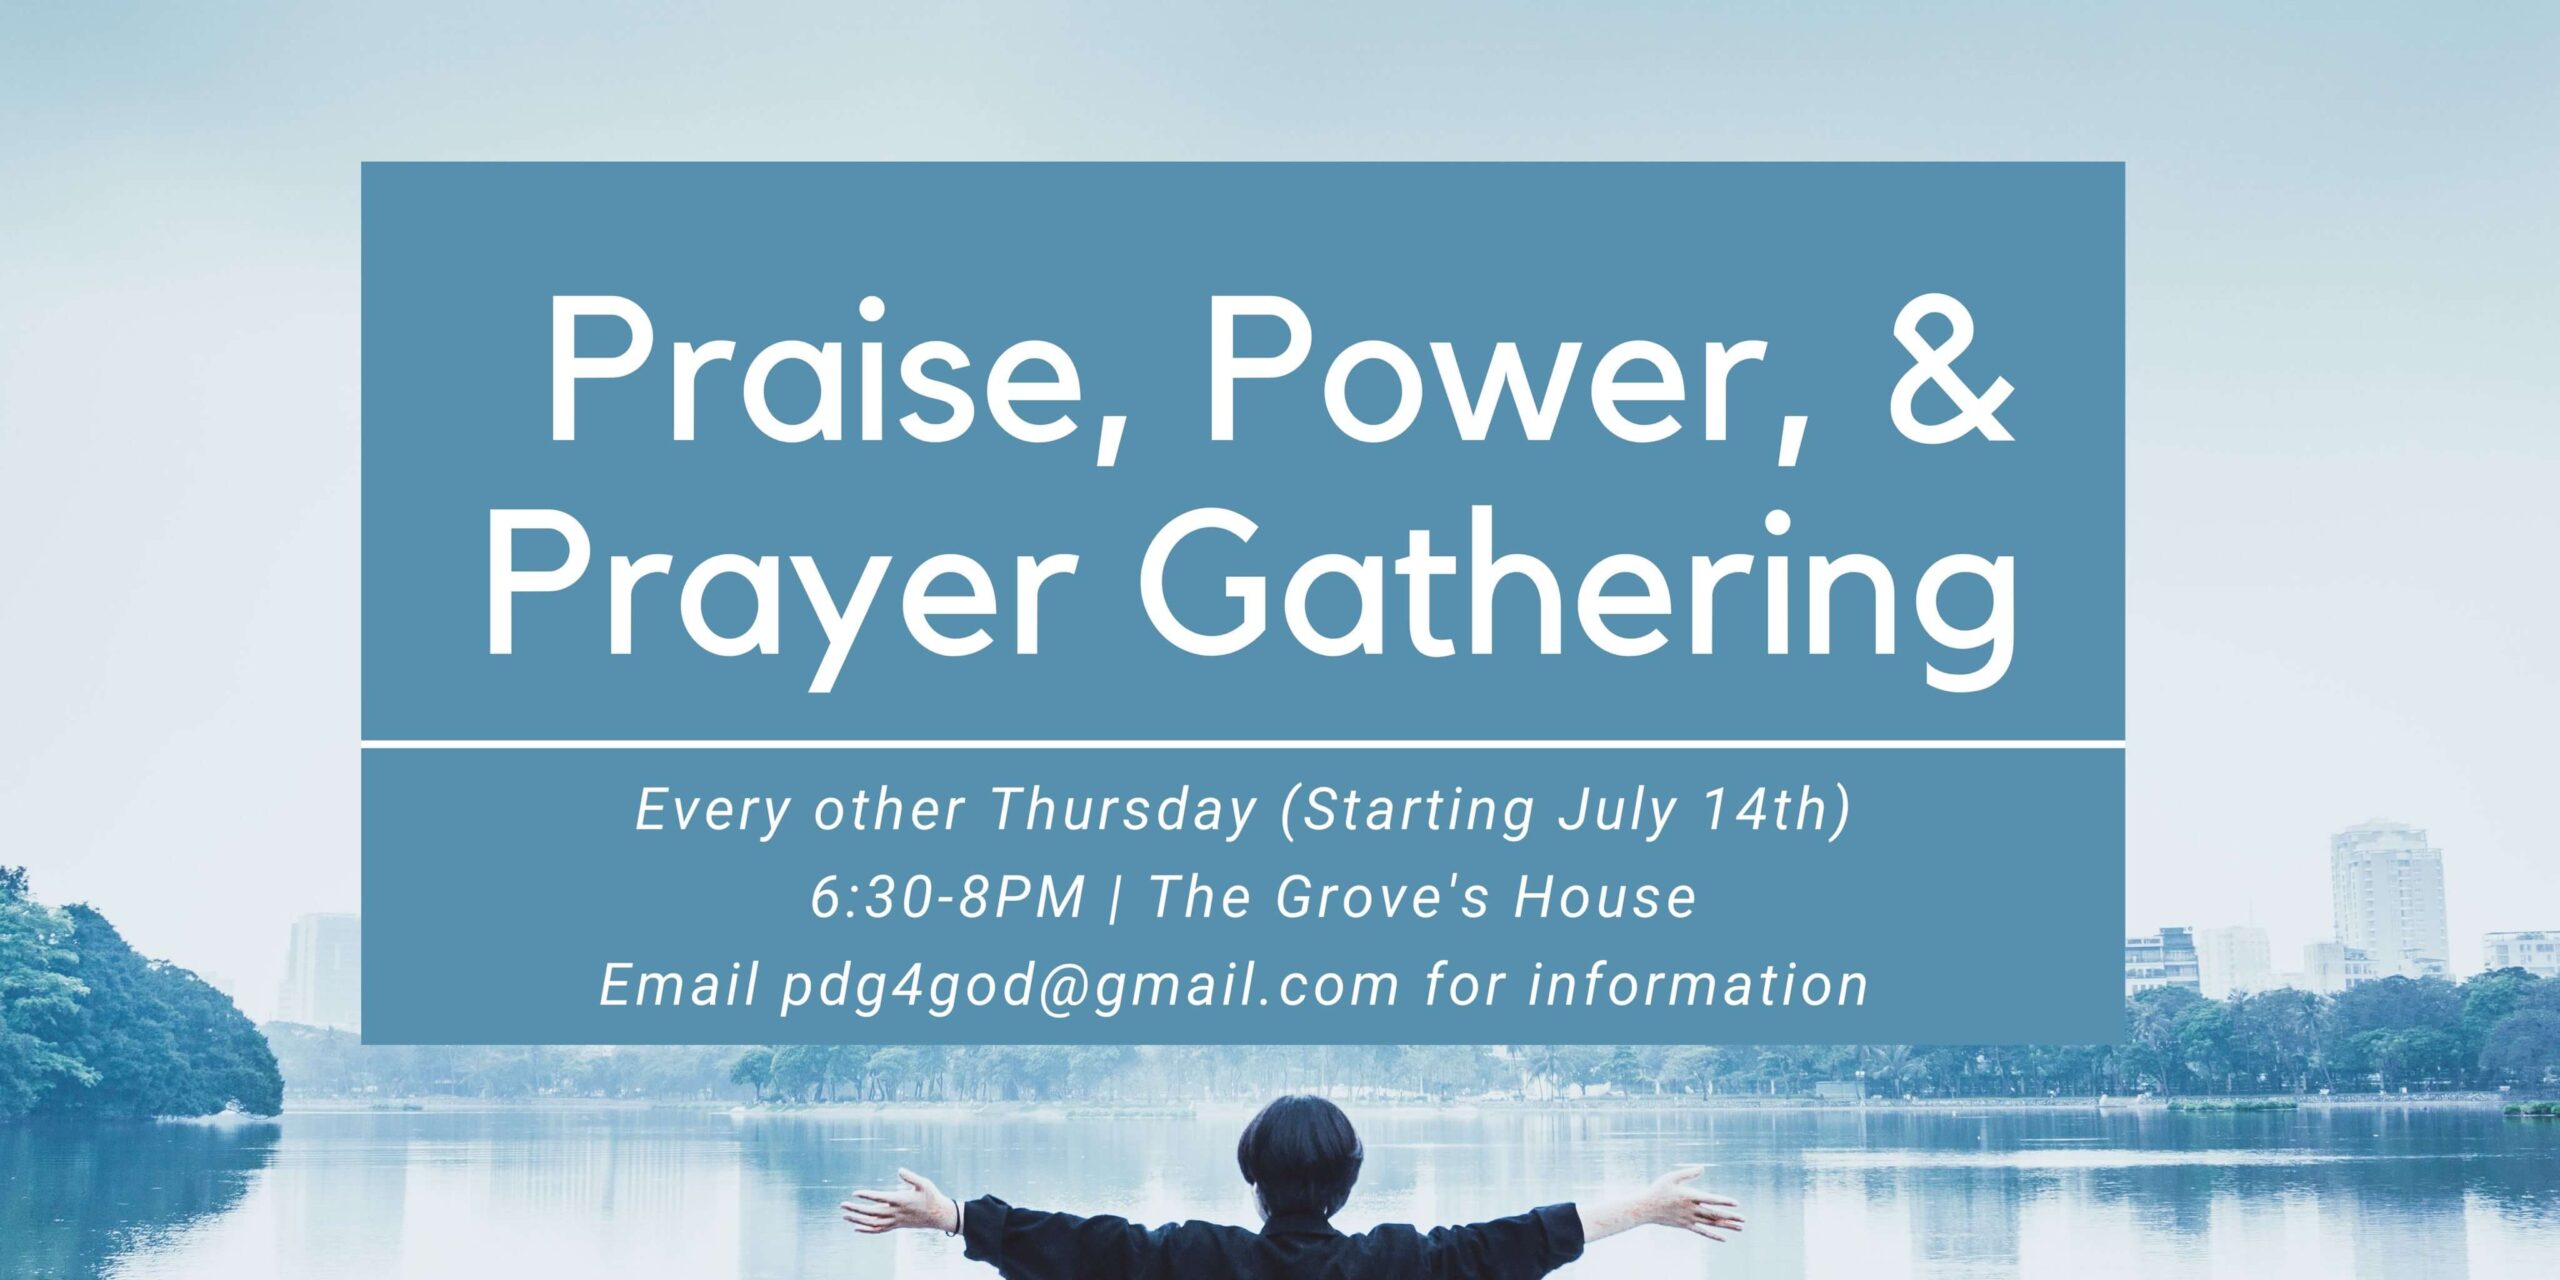 Praise, Power, & Prayer Gathering